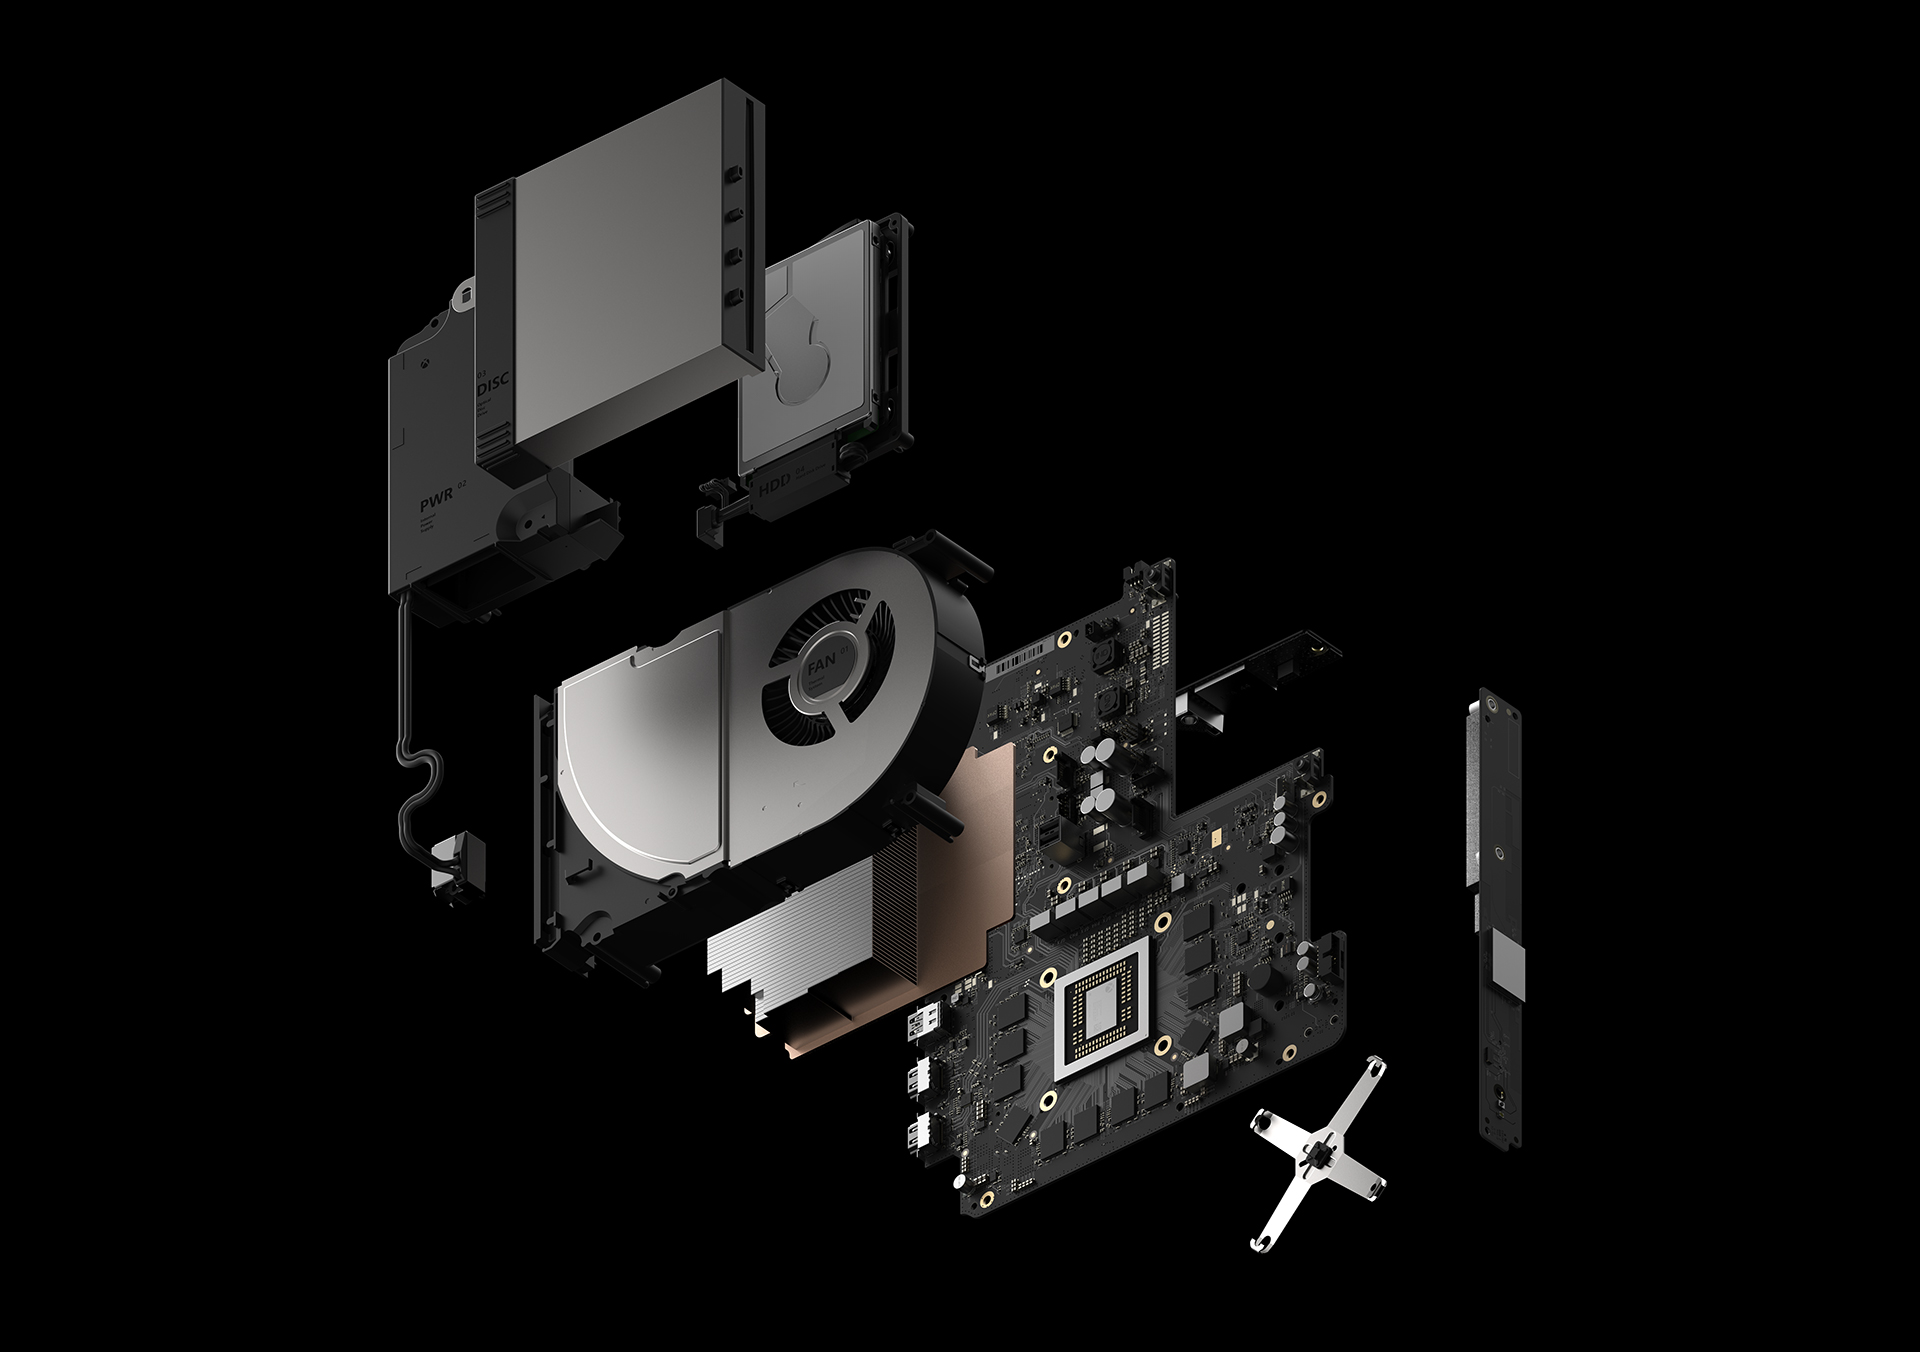 Behandeling Beknopt zo Xbox One Project Scorpio specs: 12GB GDDR5, 6 teraflops, native 4K at 60FPS  | Ars Technica